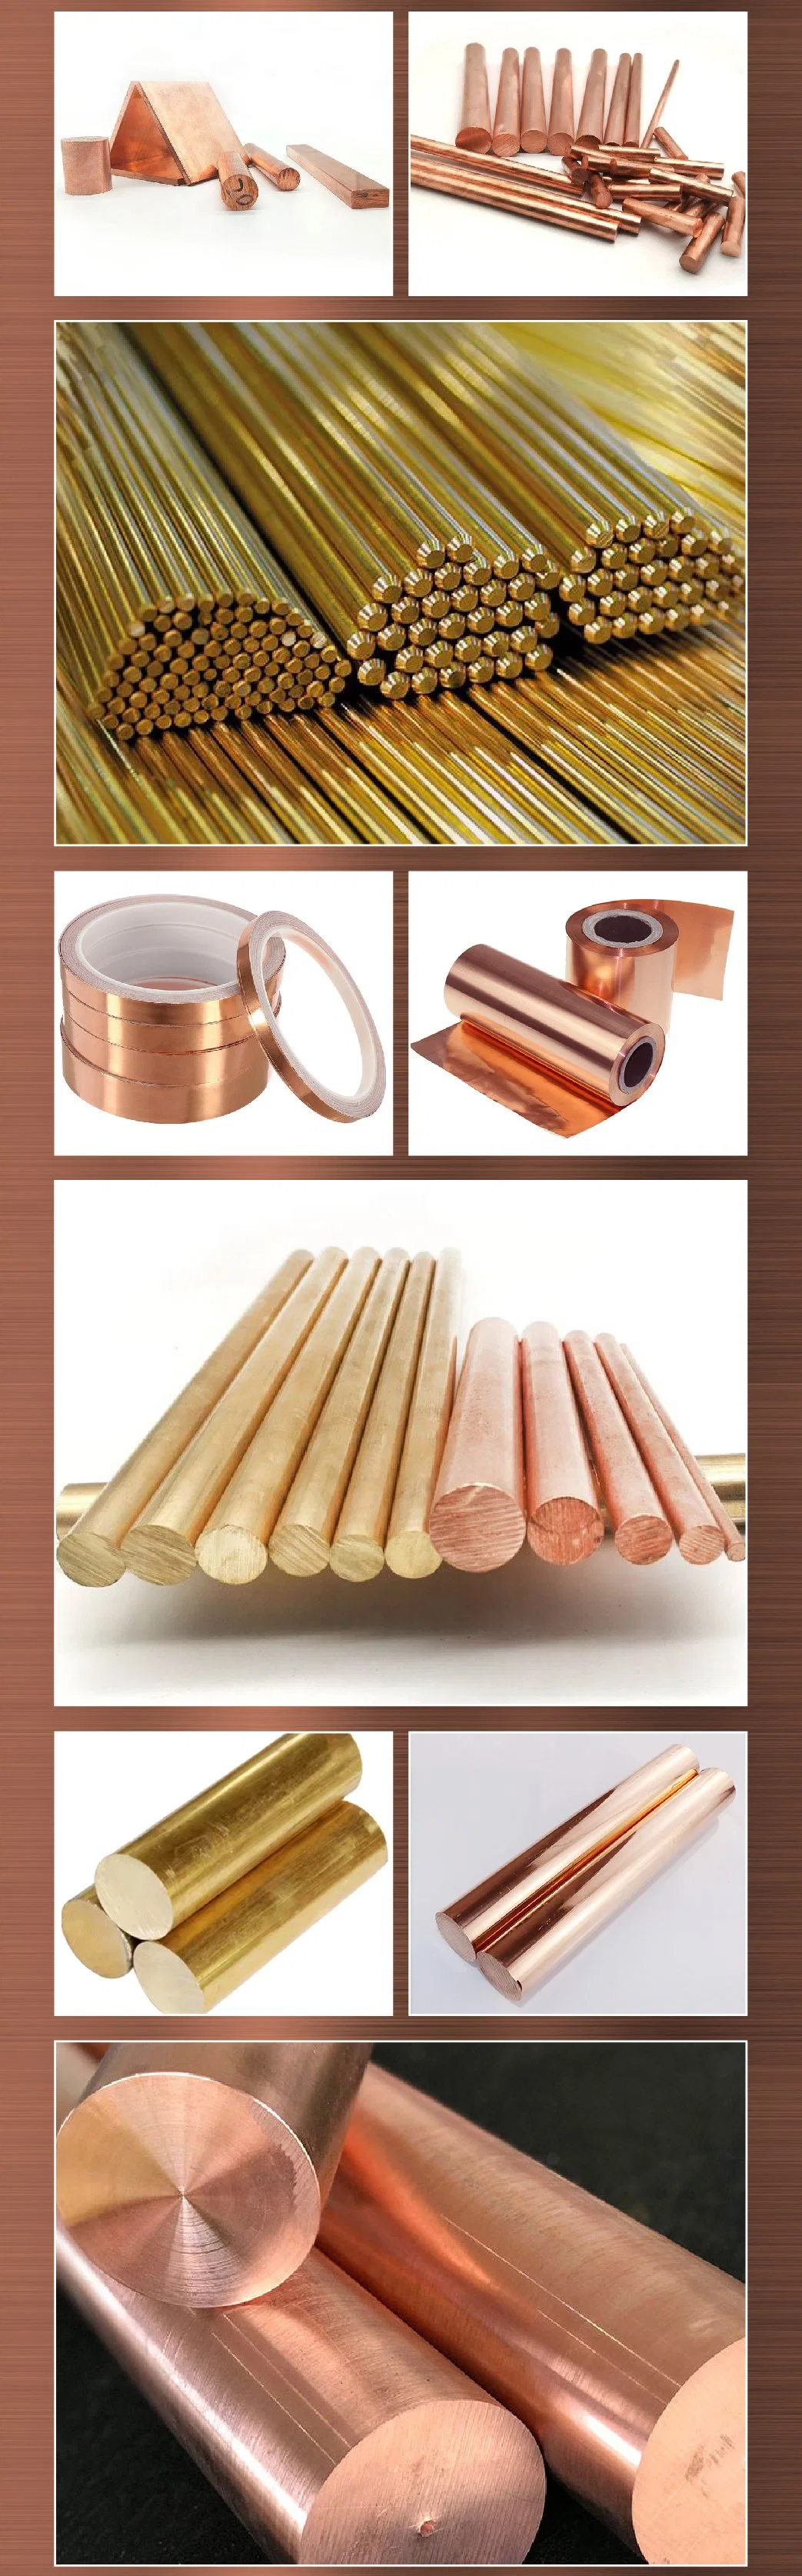 Copper Nickel Alloy Tube Price Brass Bronze Copper Tube for Solar Water Heater (C1100, C1011, C1020)